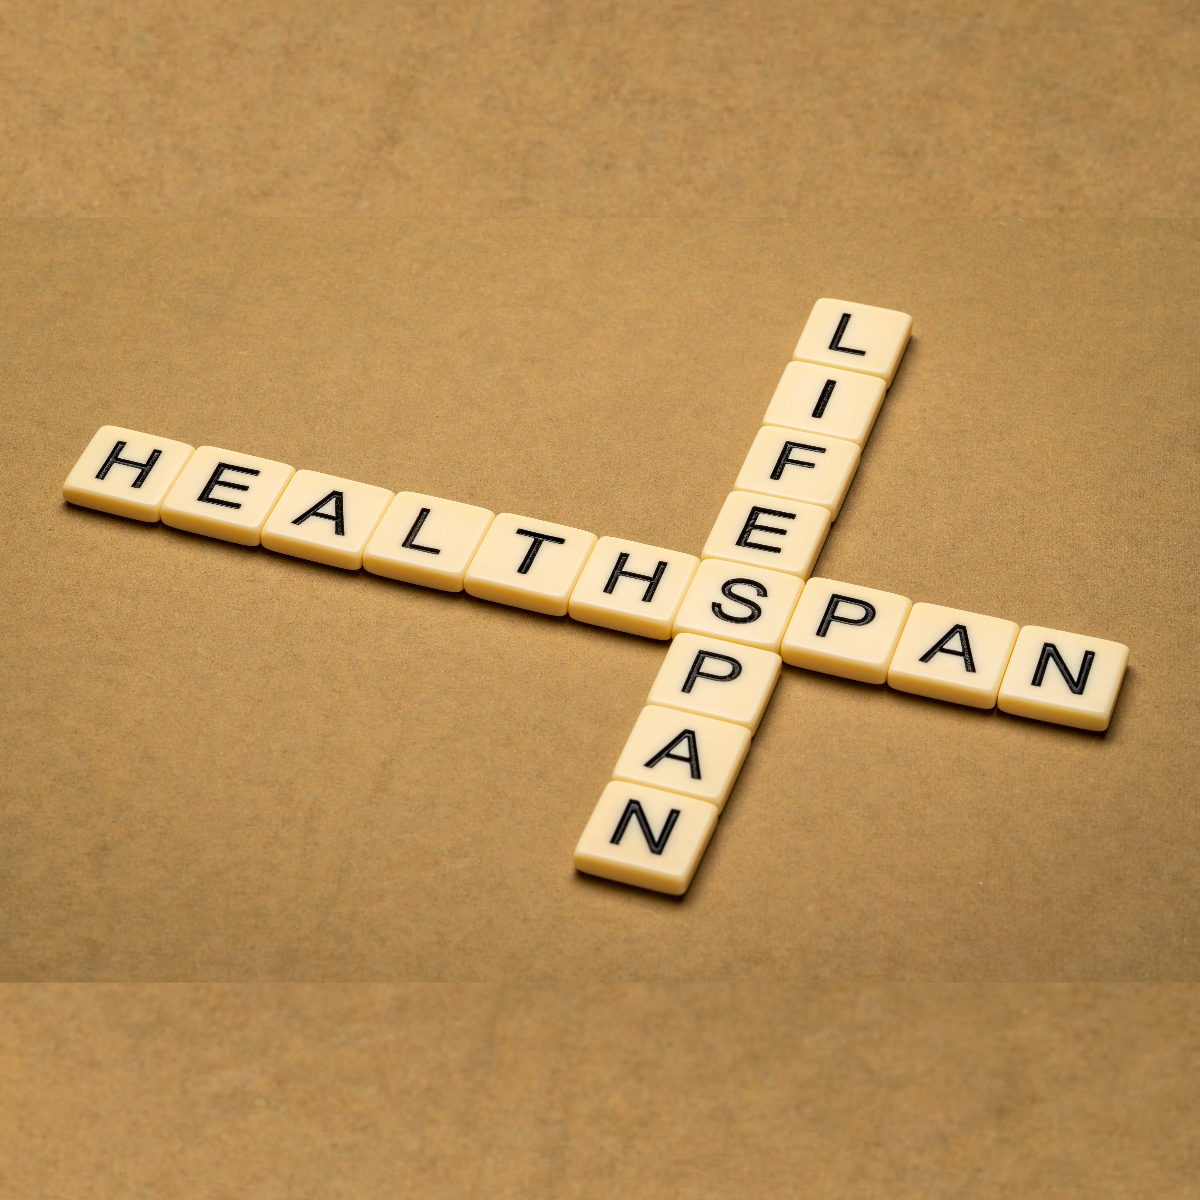 Healthspan vs Lifespan